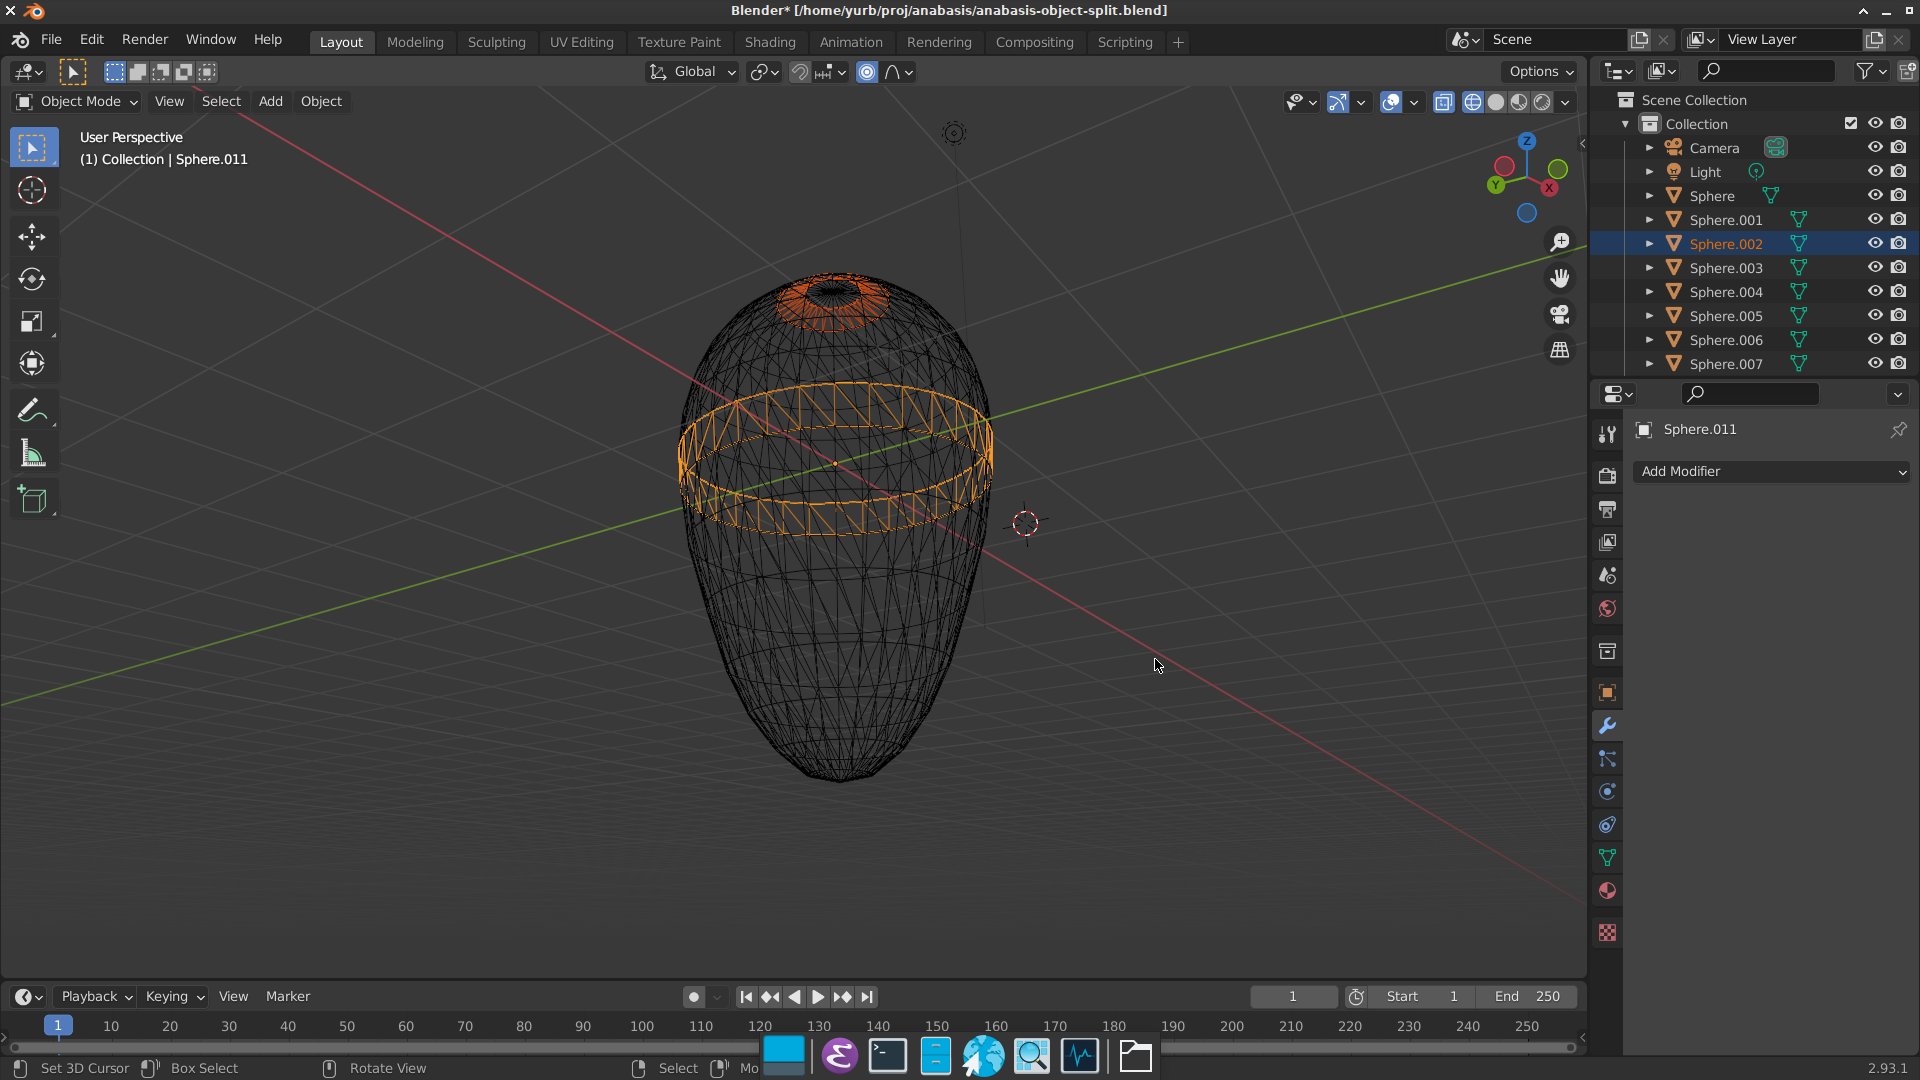 Screenshot of Blender displaying a 3d wireframe egg-like shape being edited